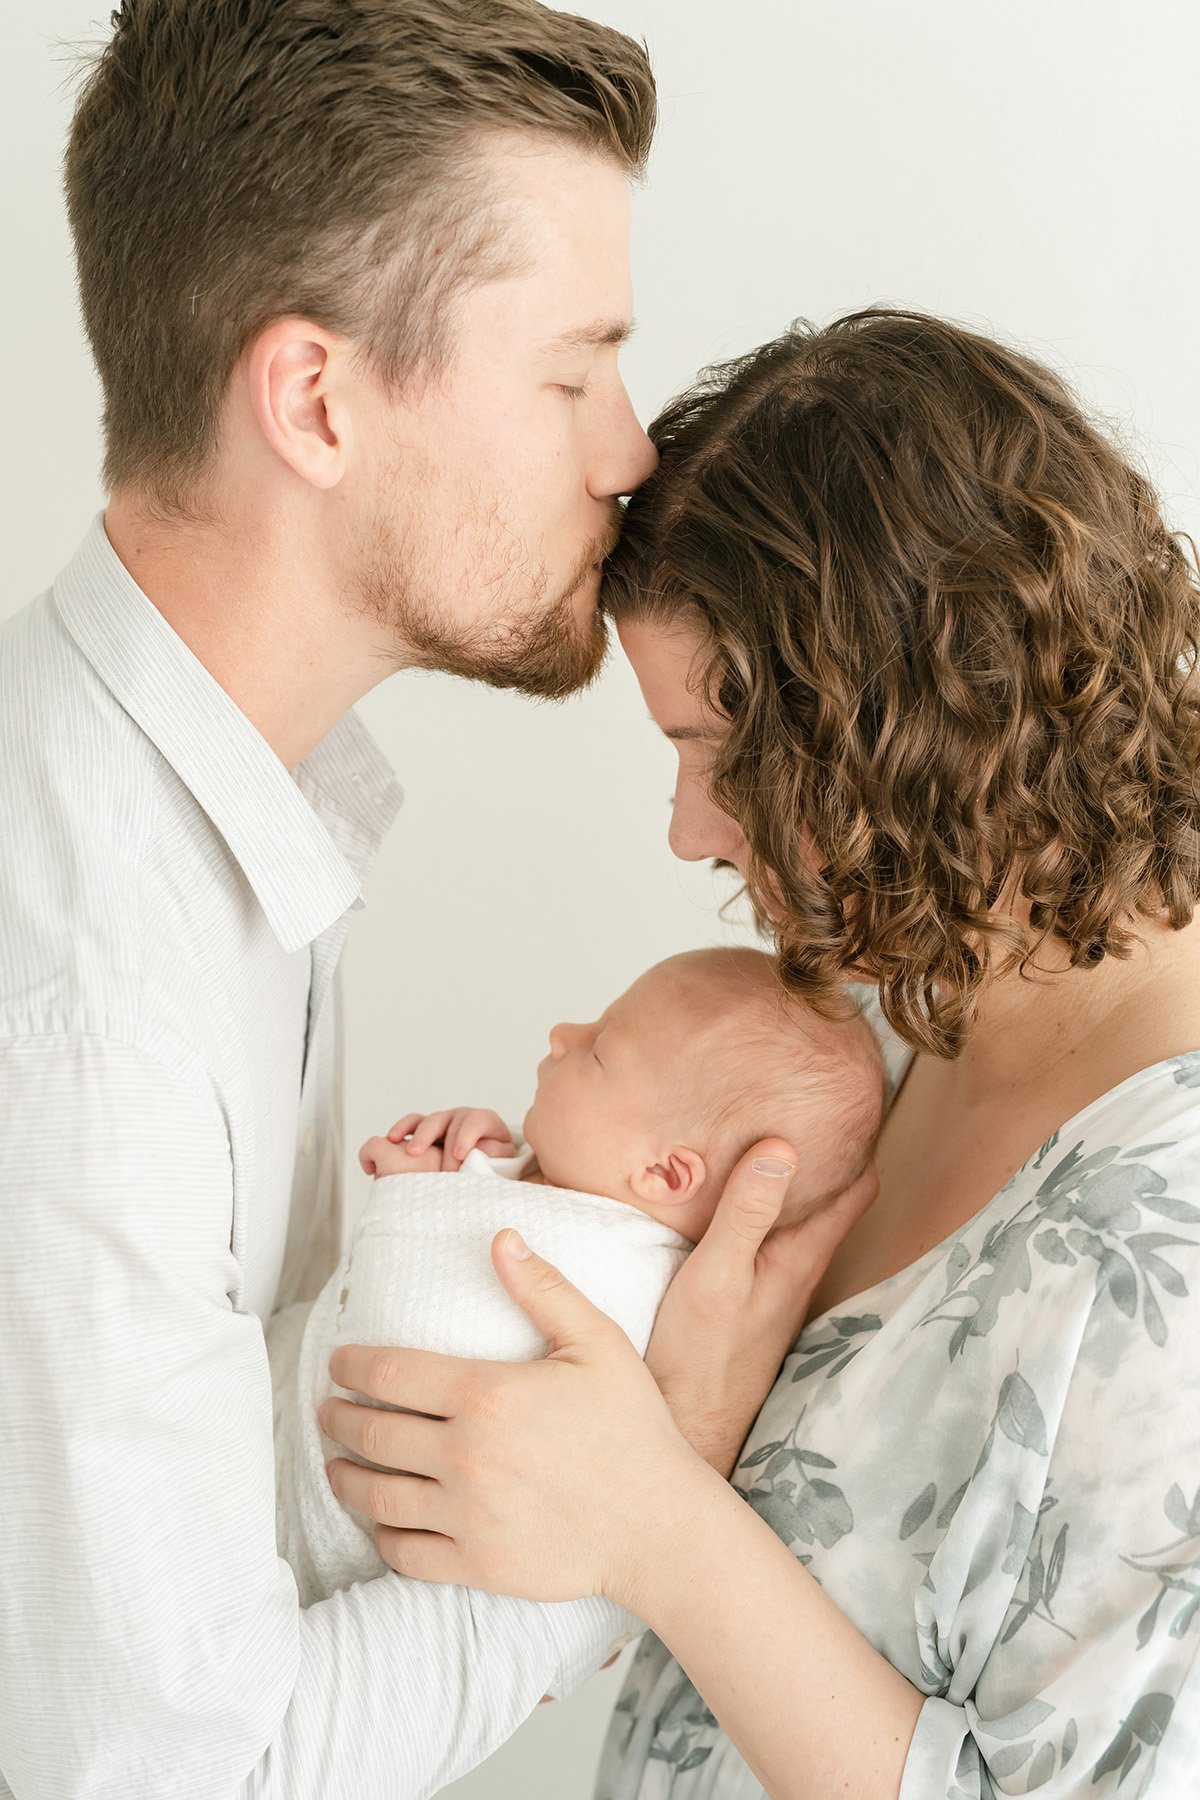 Dad kisses mom's forehead during newborn photo shoot